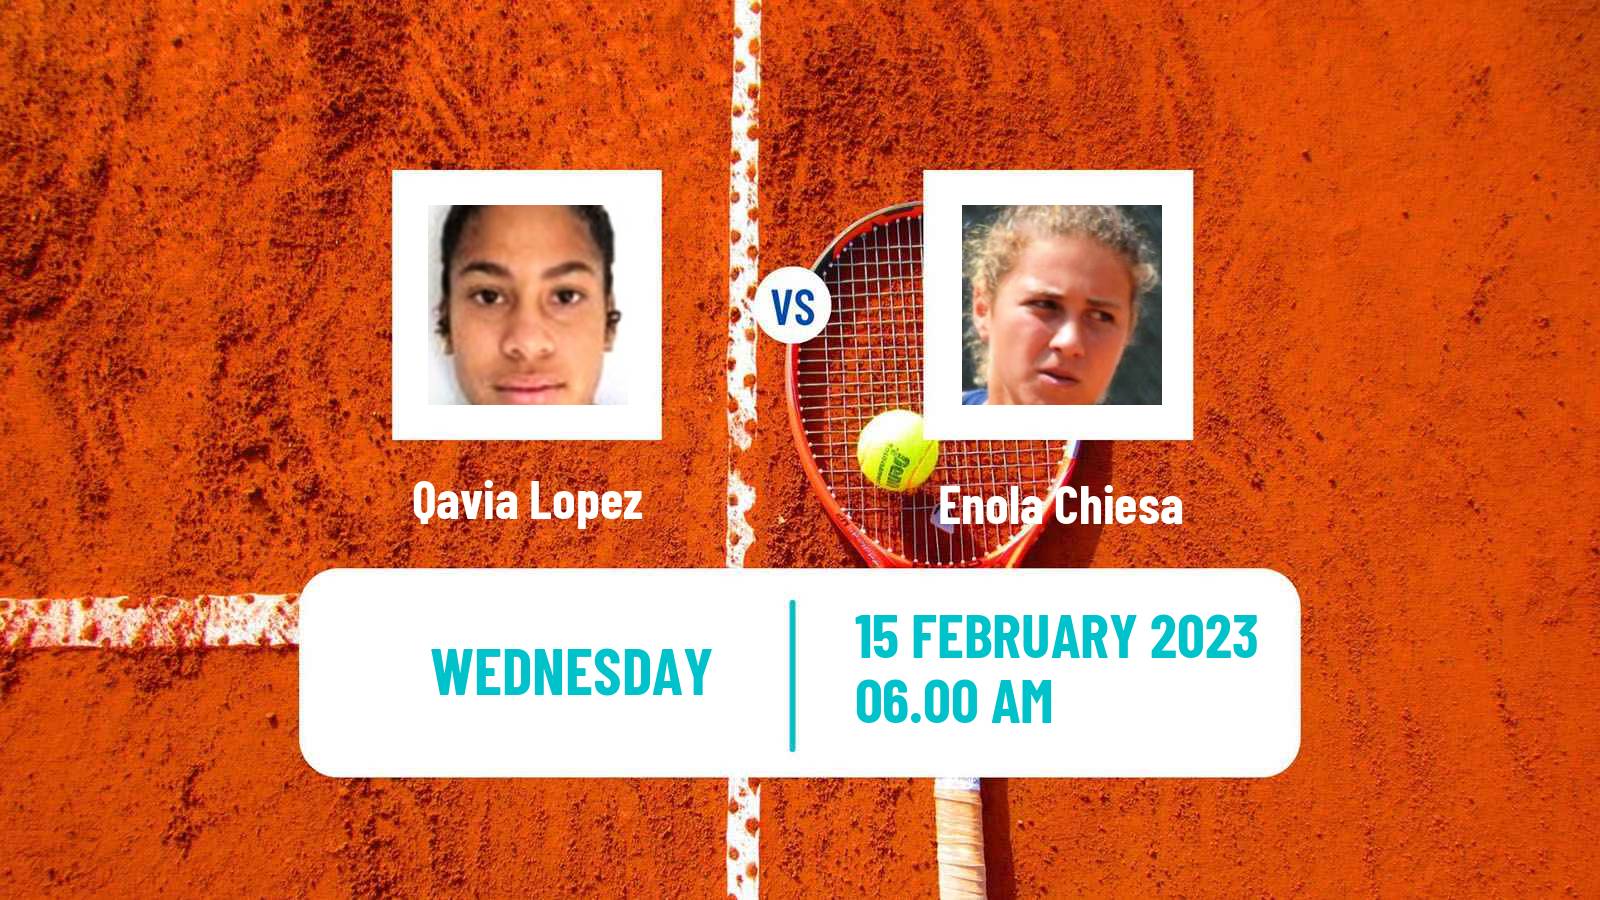 Tennis ITF Tournaments Qavia Lopez - Enola Chiesa